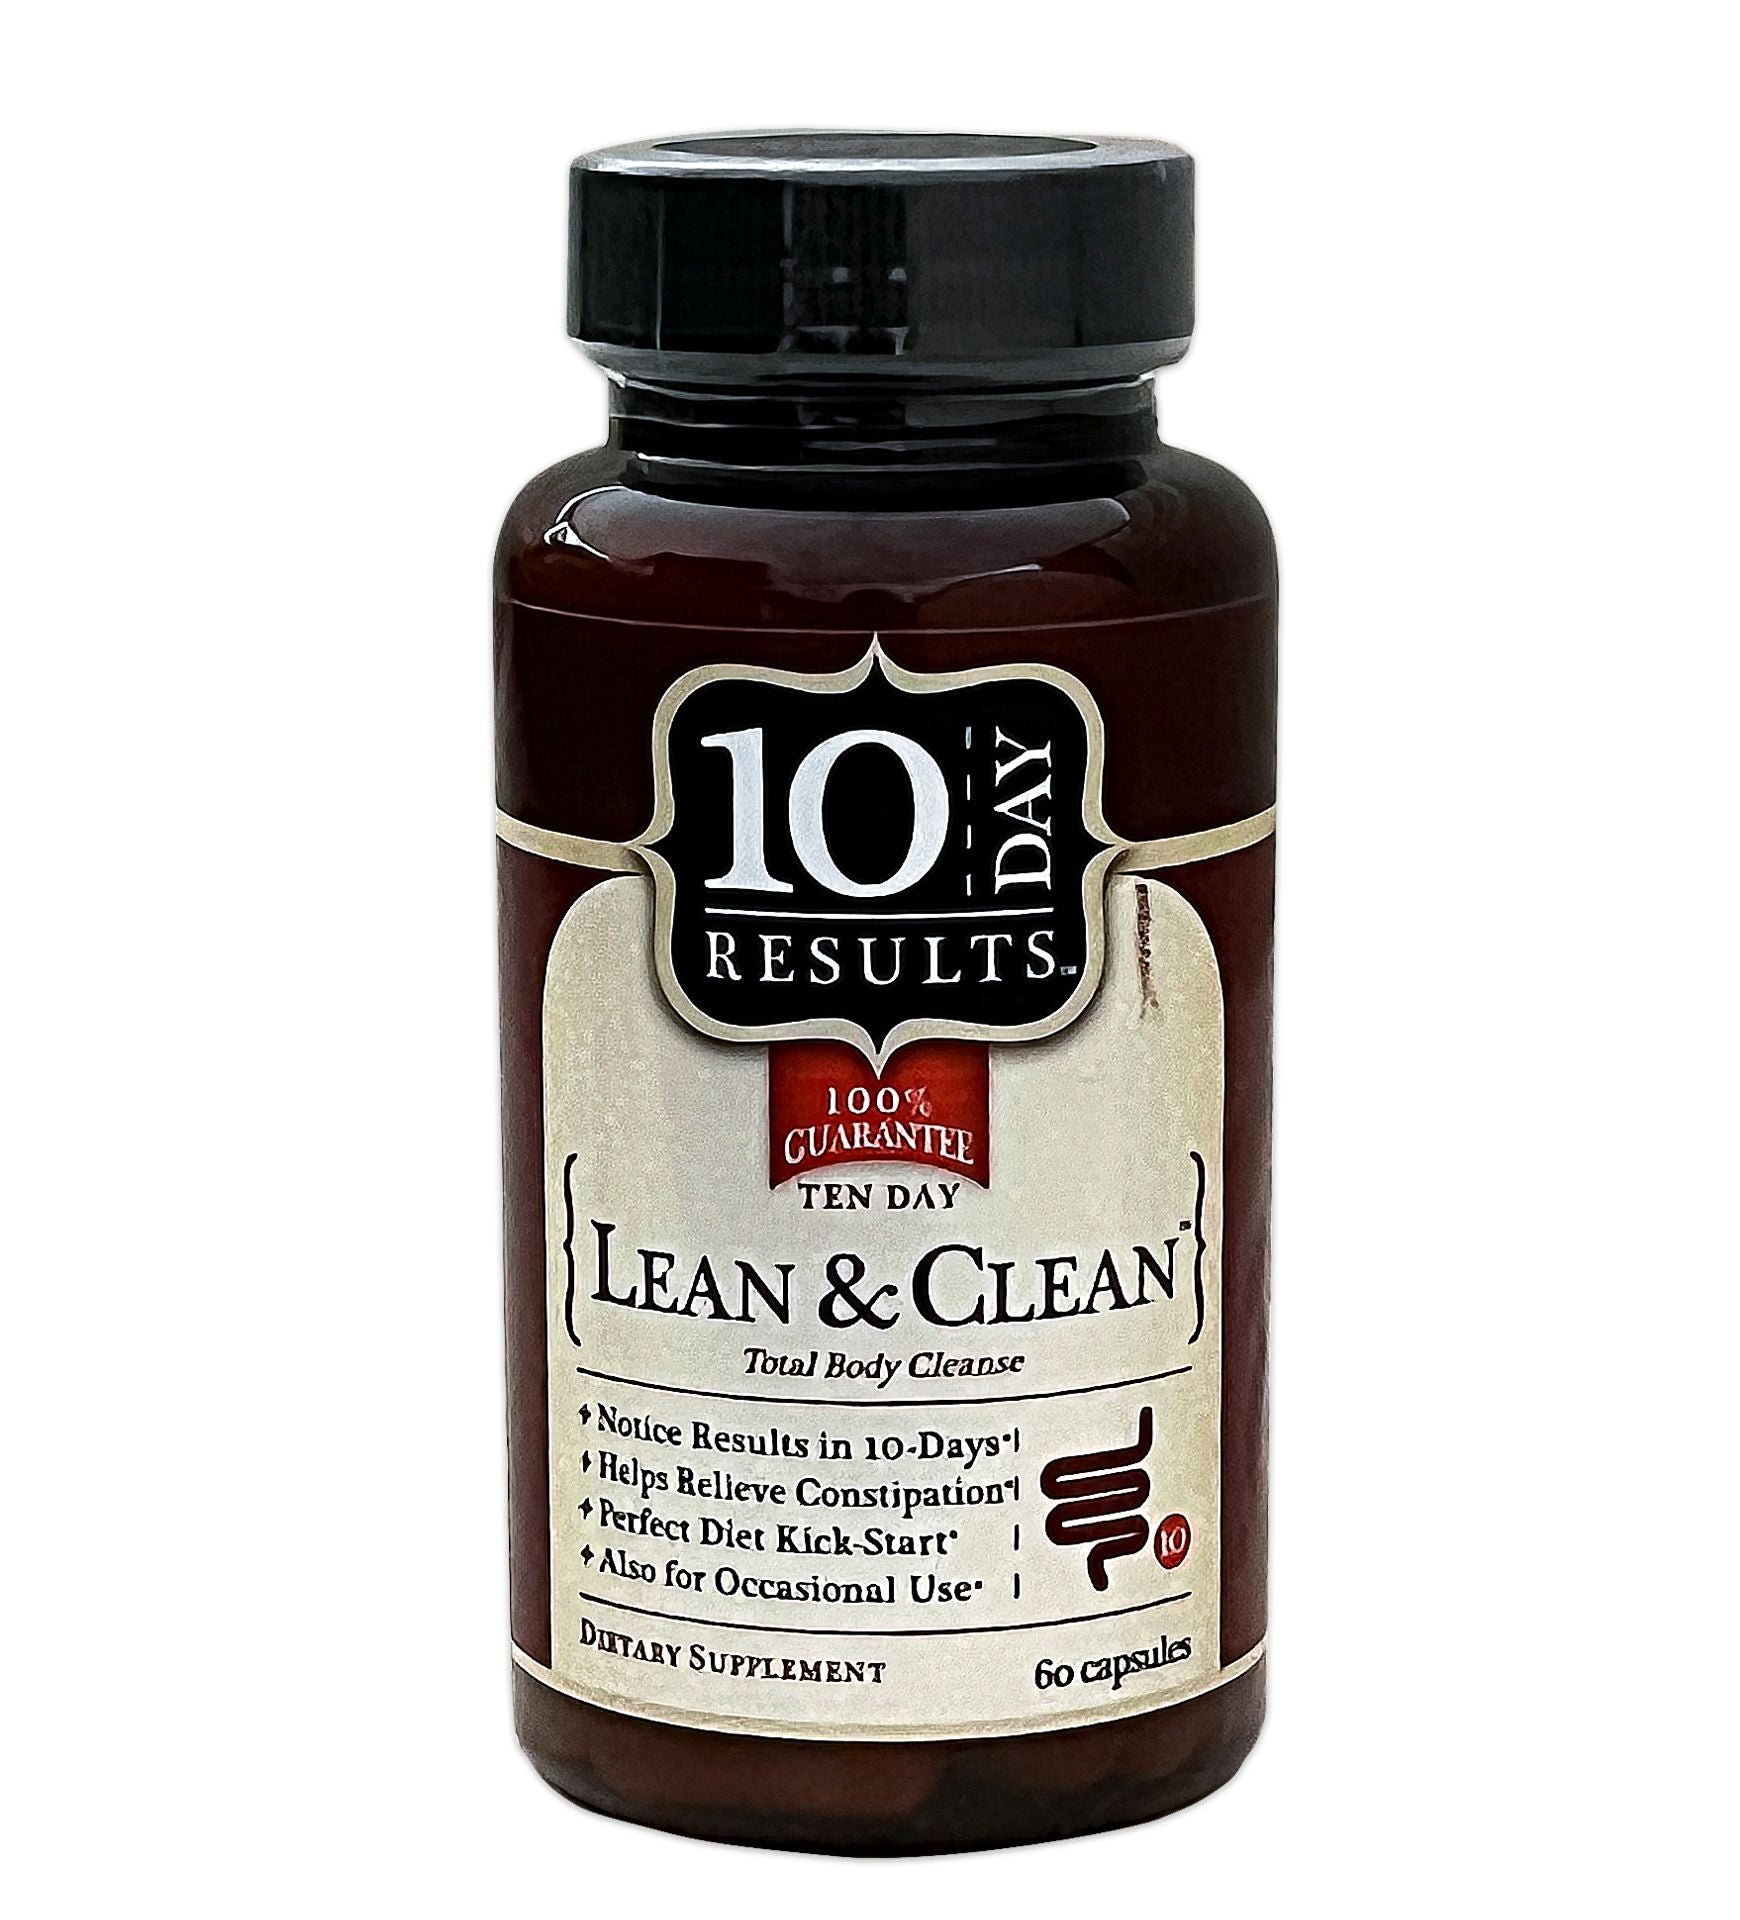 Lean & Clean Total Body Cleanse